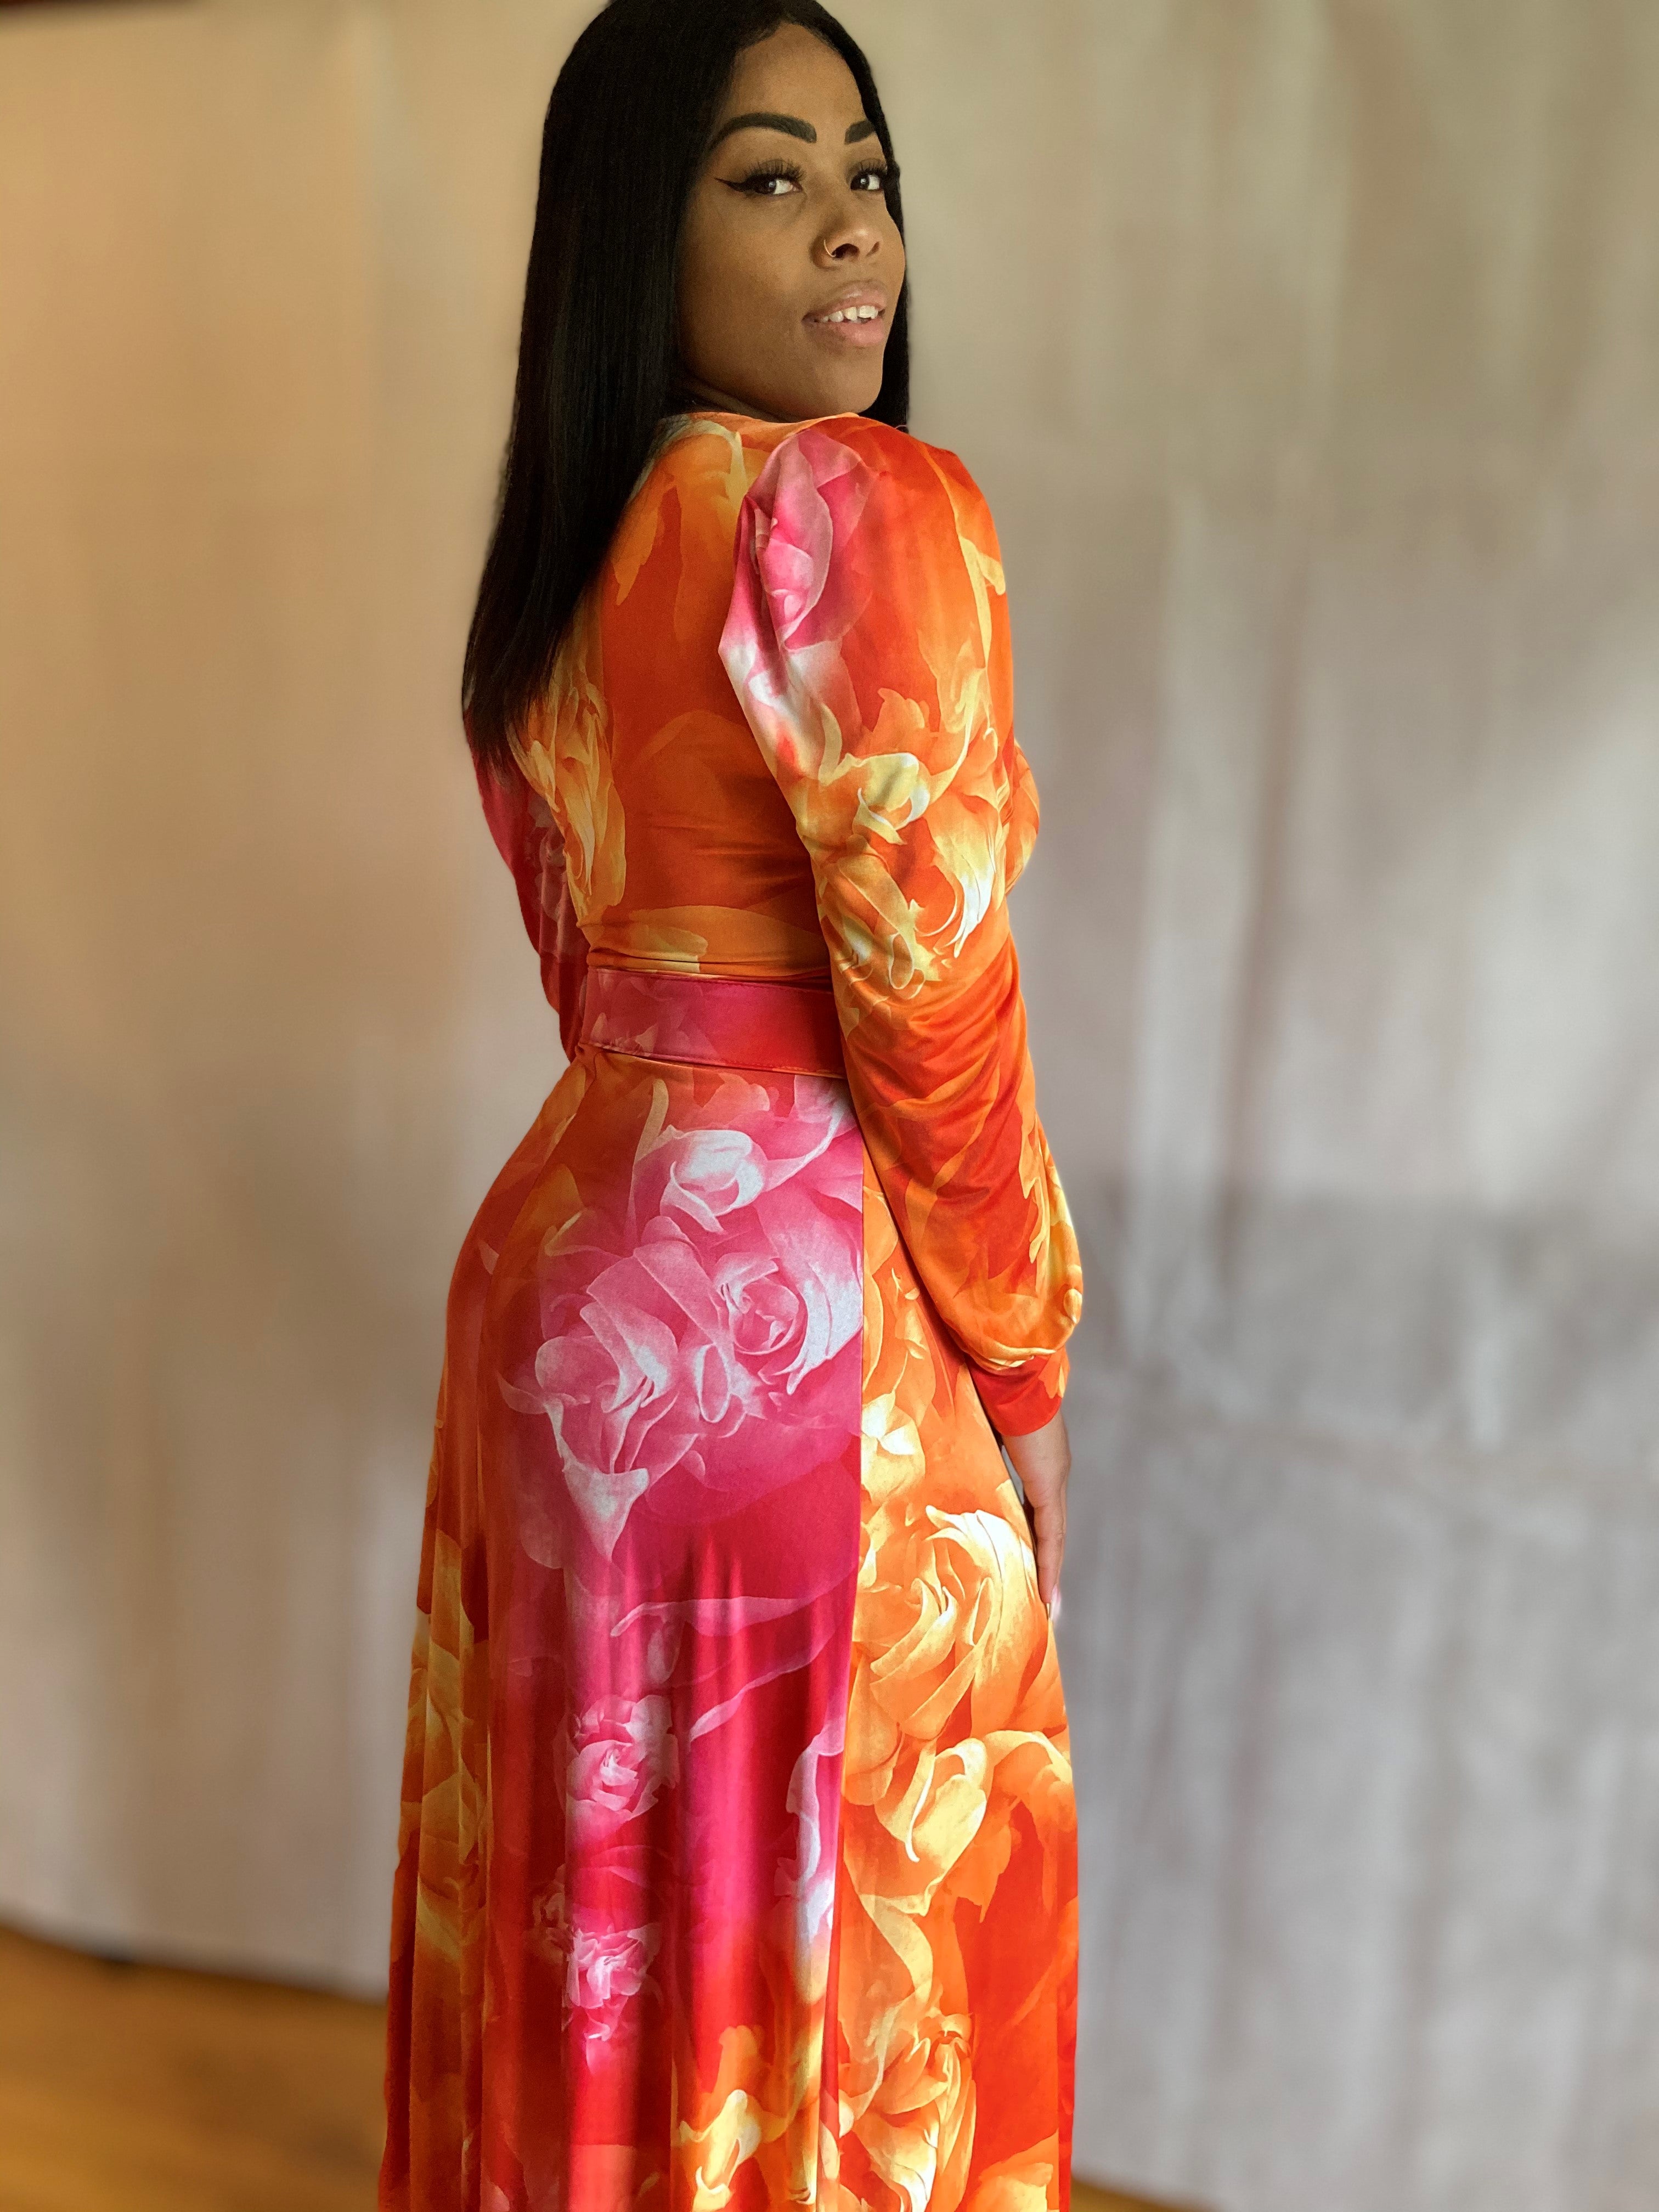 Beautiful Vibrant Colors of Summer Maxi Dress!